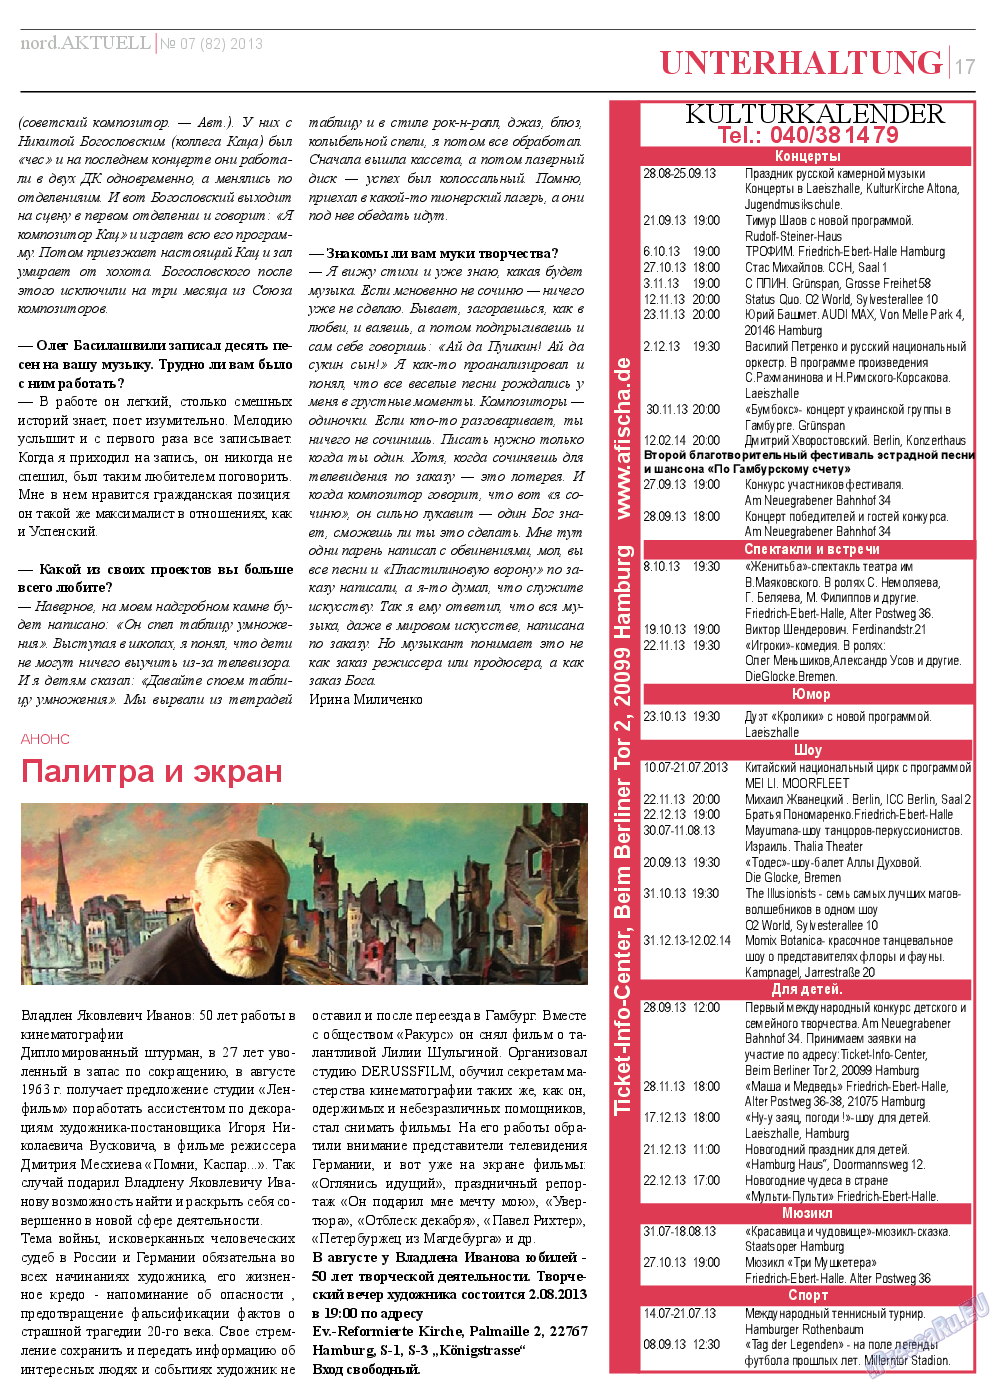 nord.Aktuell, газета. 2013 №7 стр.17